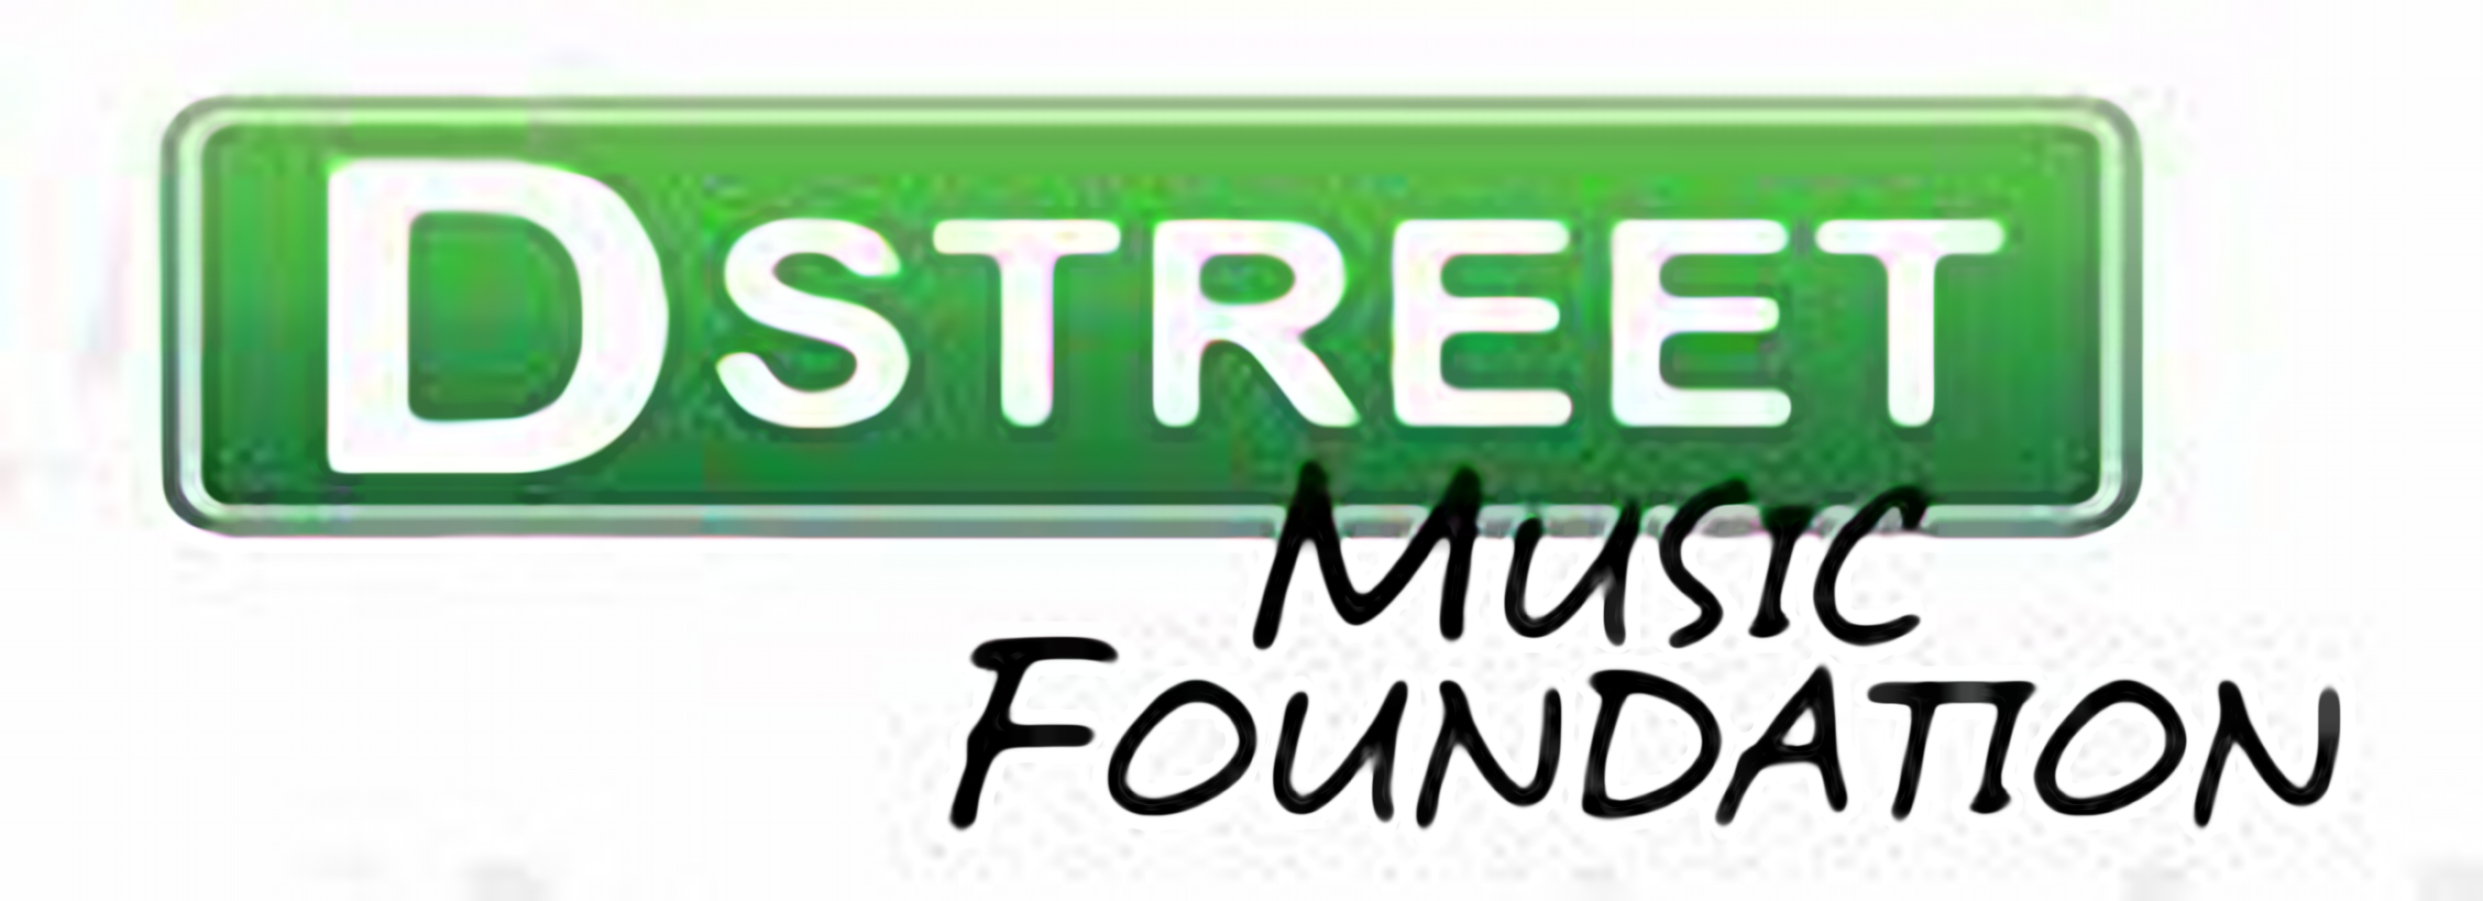 DStreet_Music_Foundation_logo_resized_8642q.j...